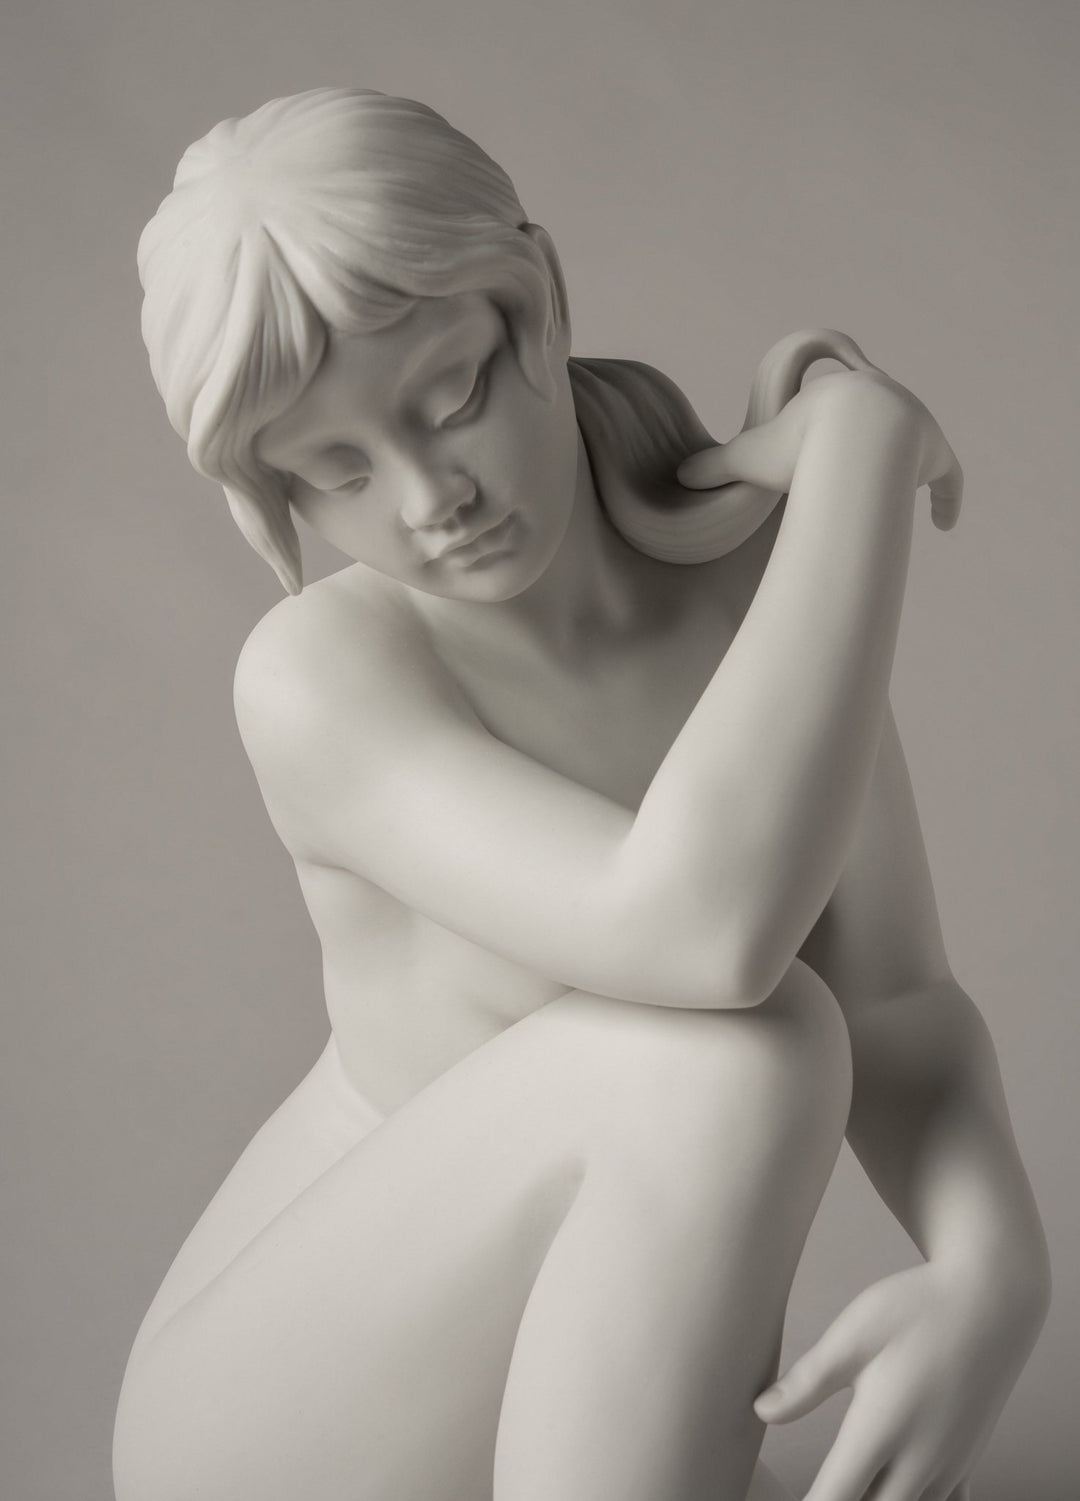 LLADRO® Figur »Pure Calm Sculpture - Reine Ruhe 32cm« 01009589-010-09589